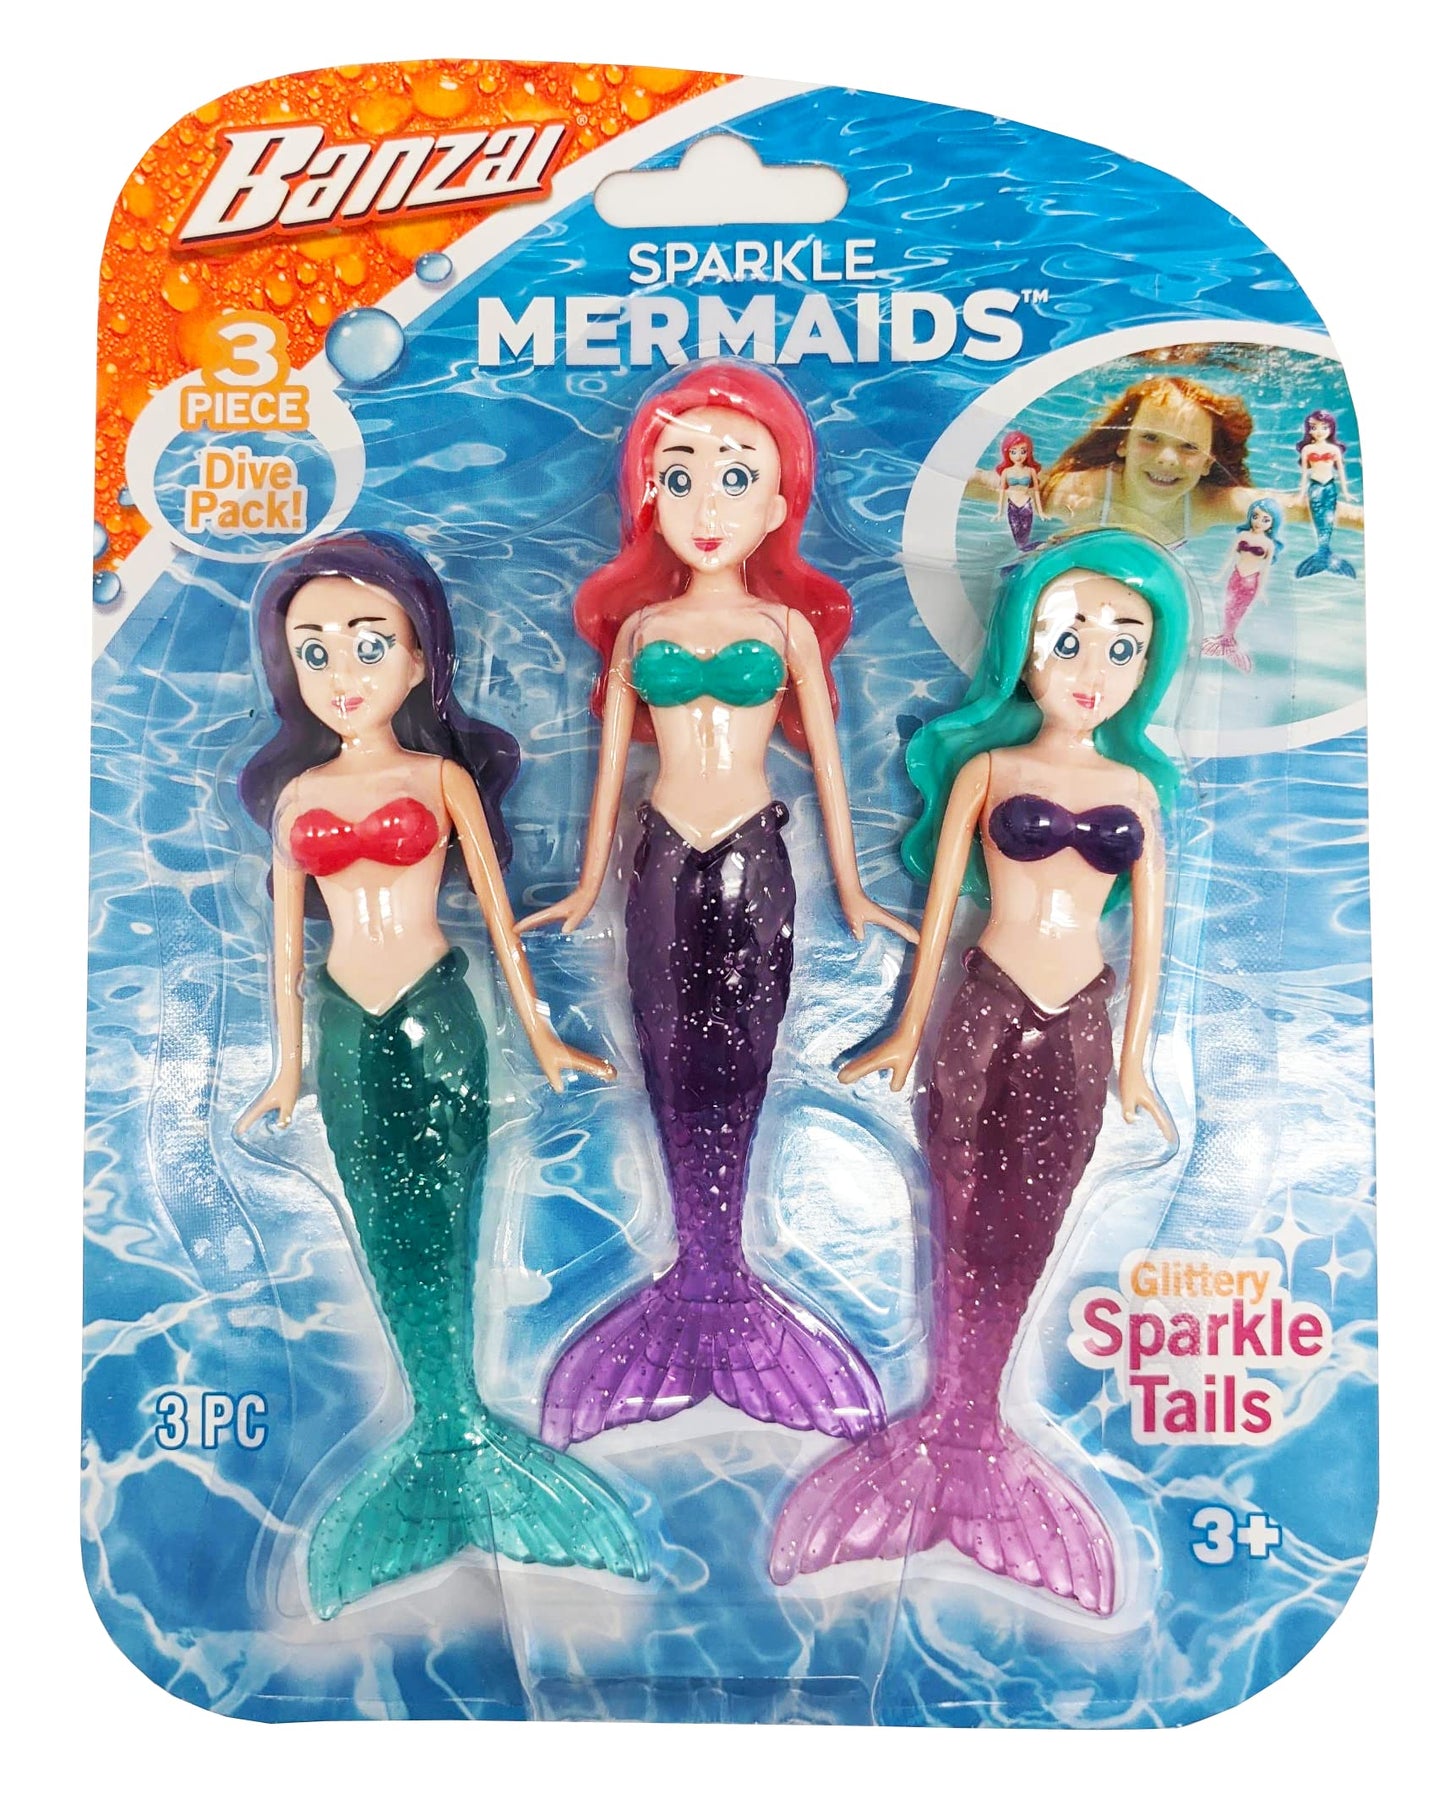 BANZAI 3 Piece Sparkle Mermaid Dive Toys - Glittery Sparkle Tails